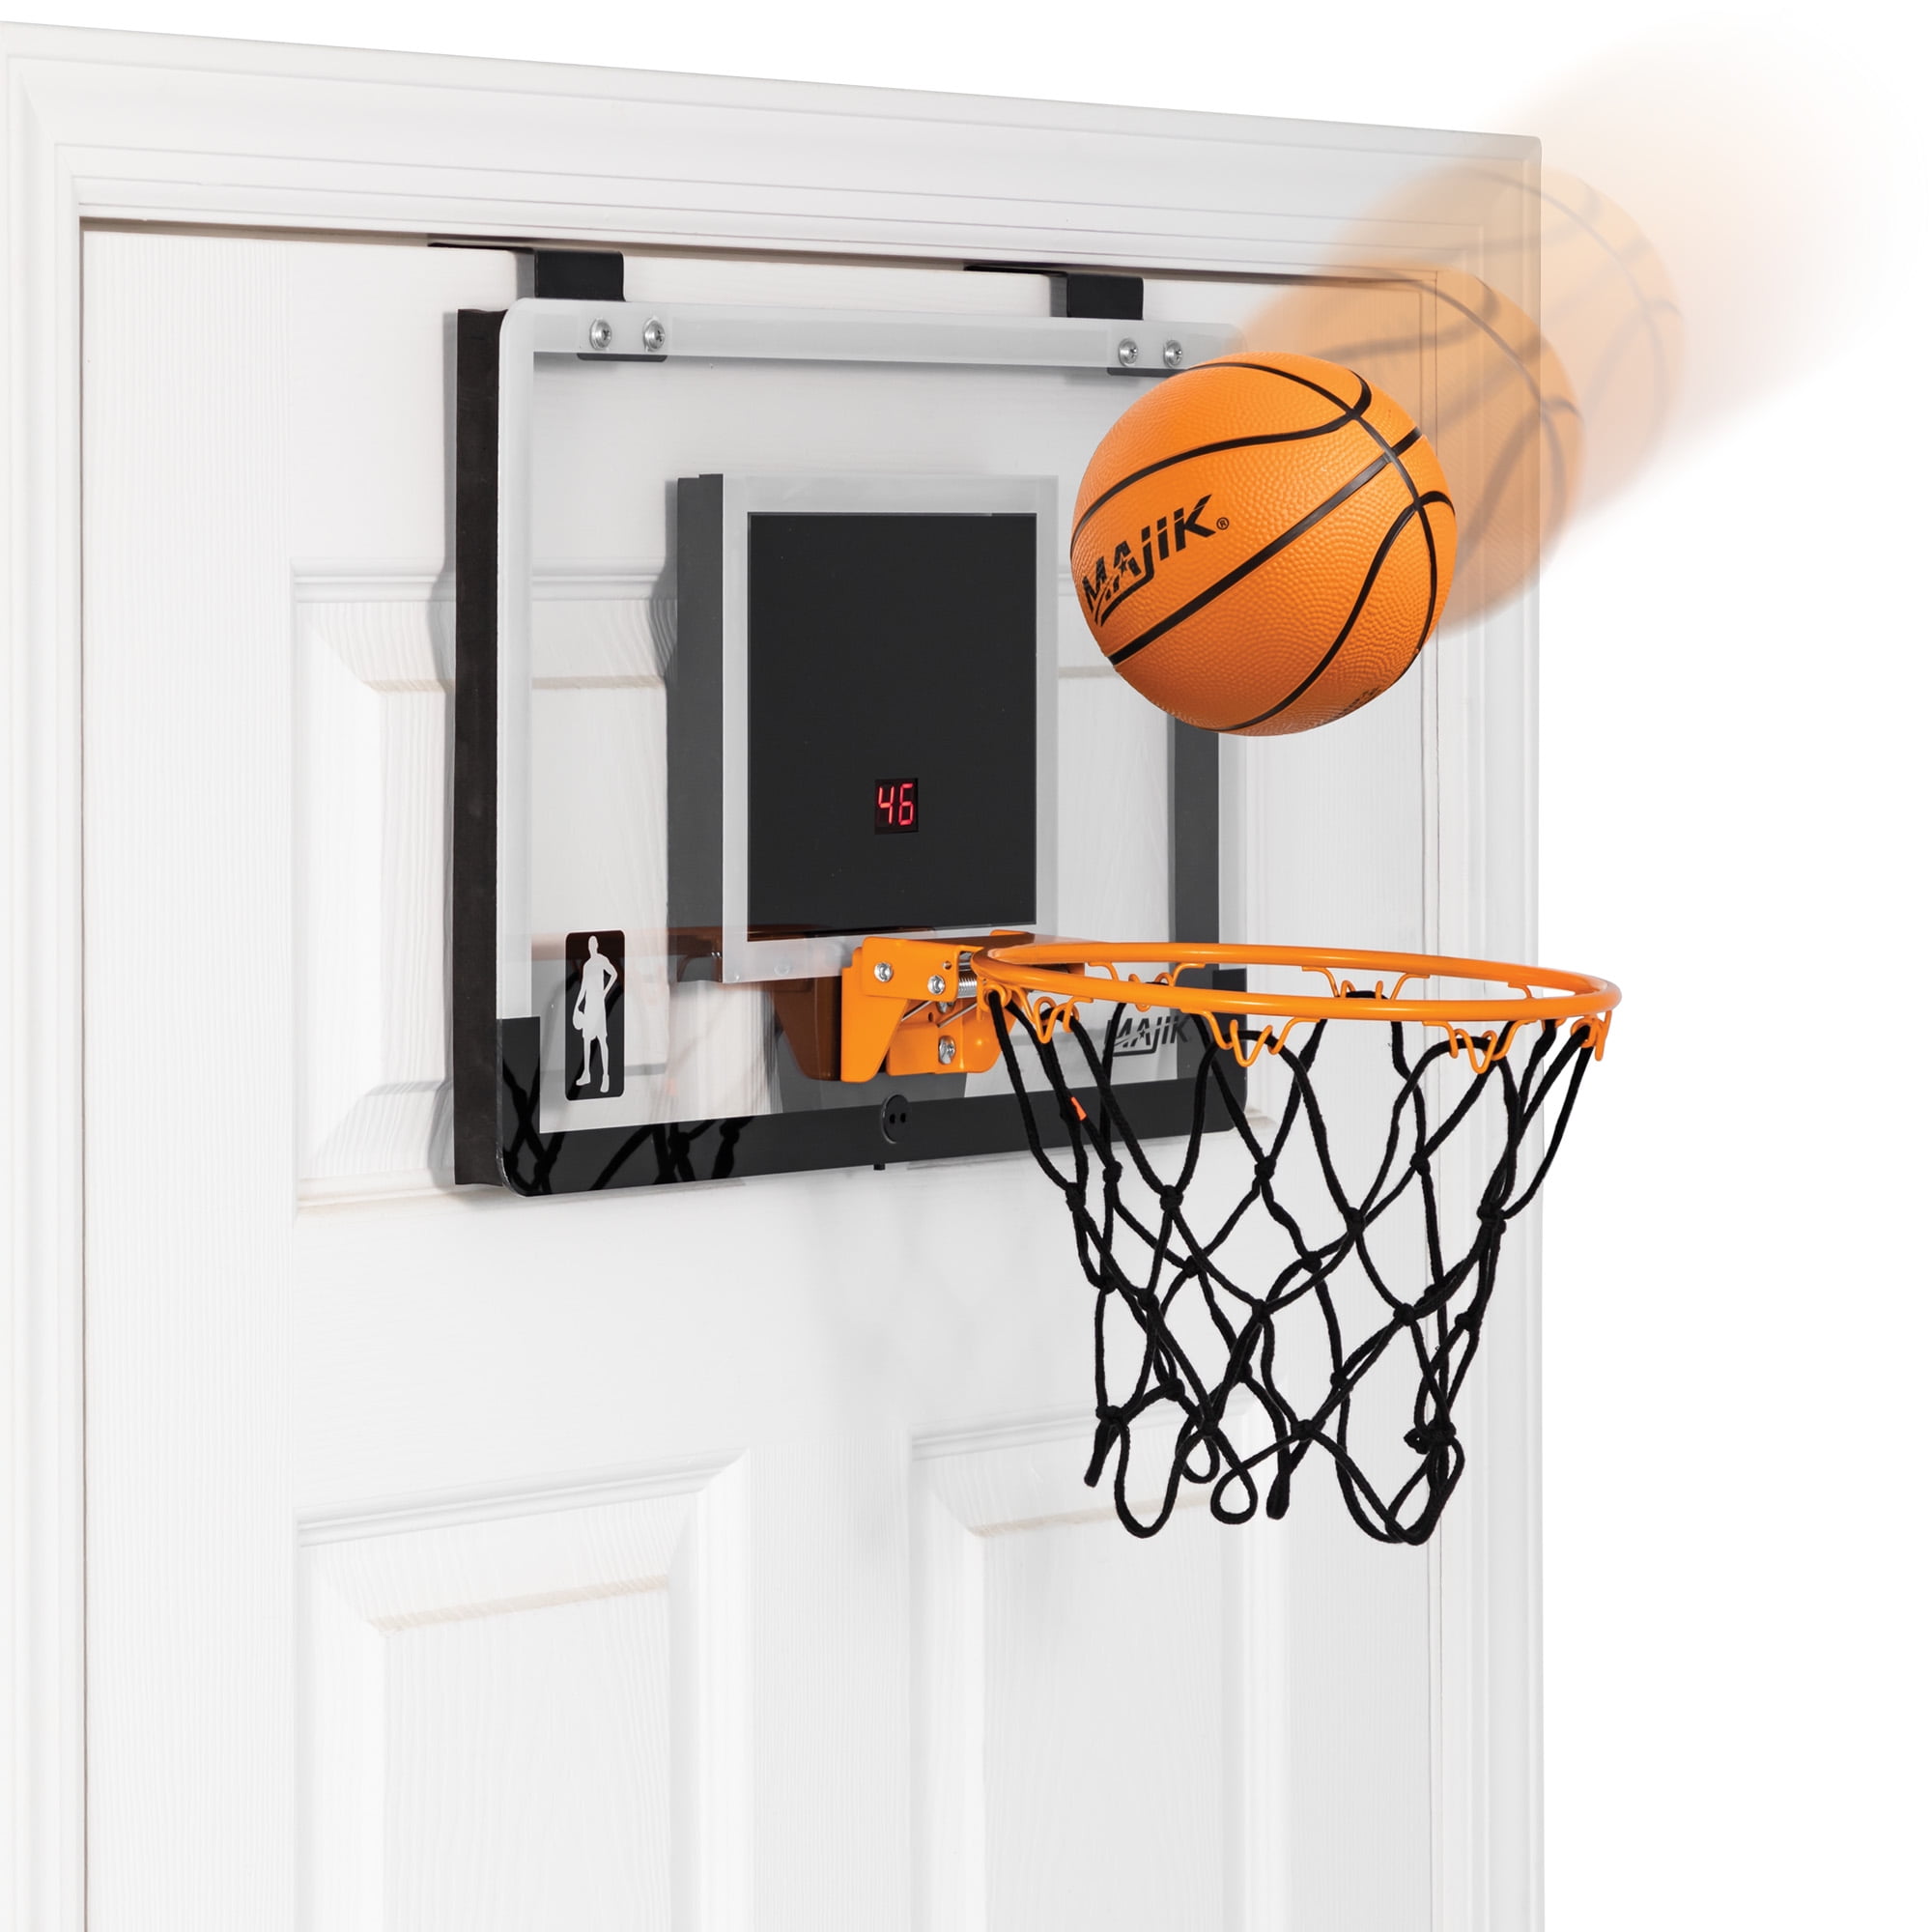 16" x 12" Basketball Indoor Mini Basketball Hoop Set for Kids with 2 Balls 